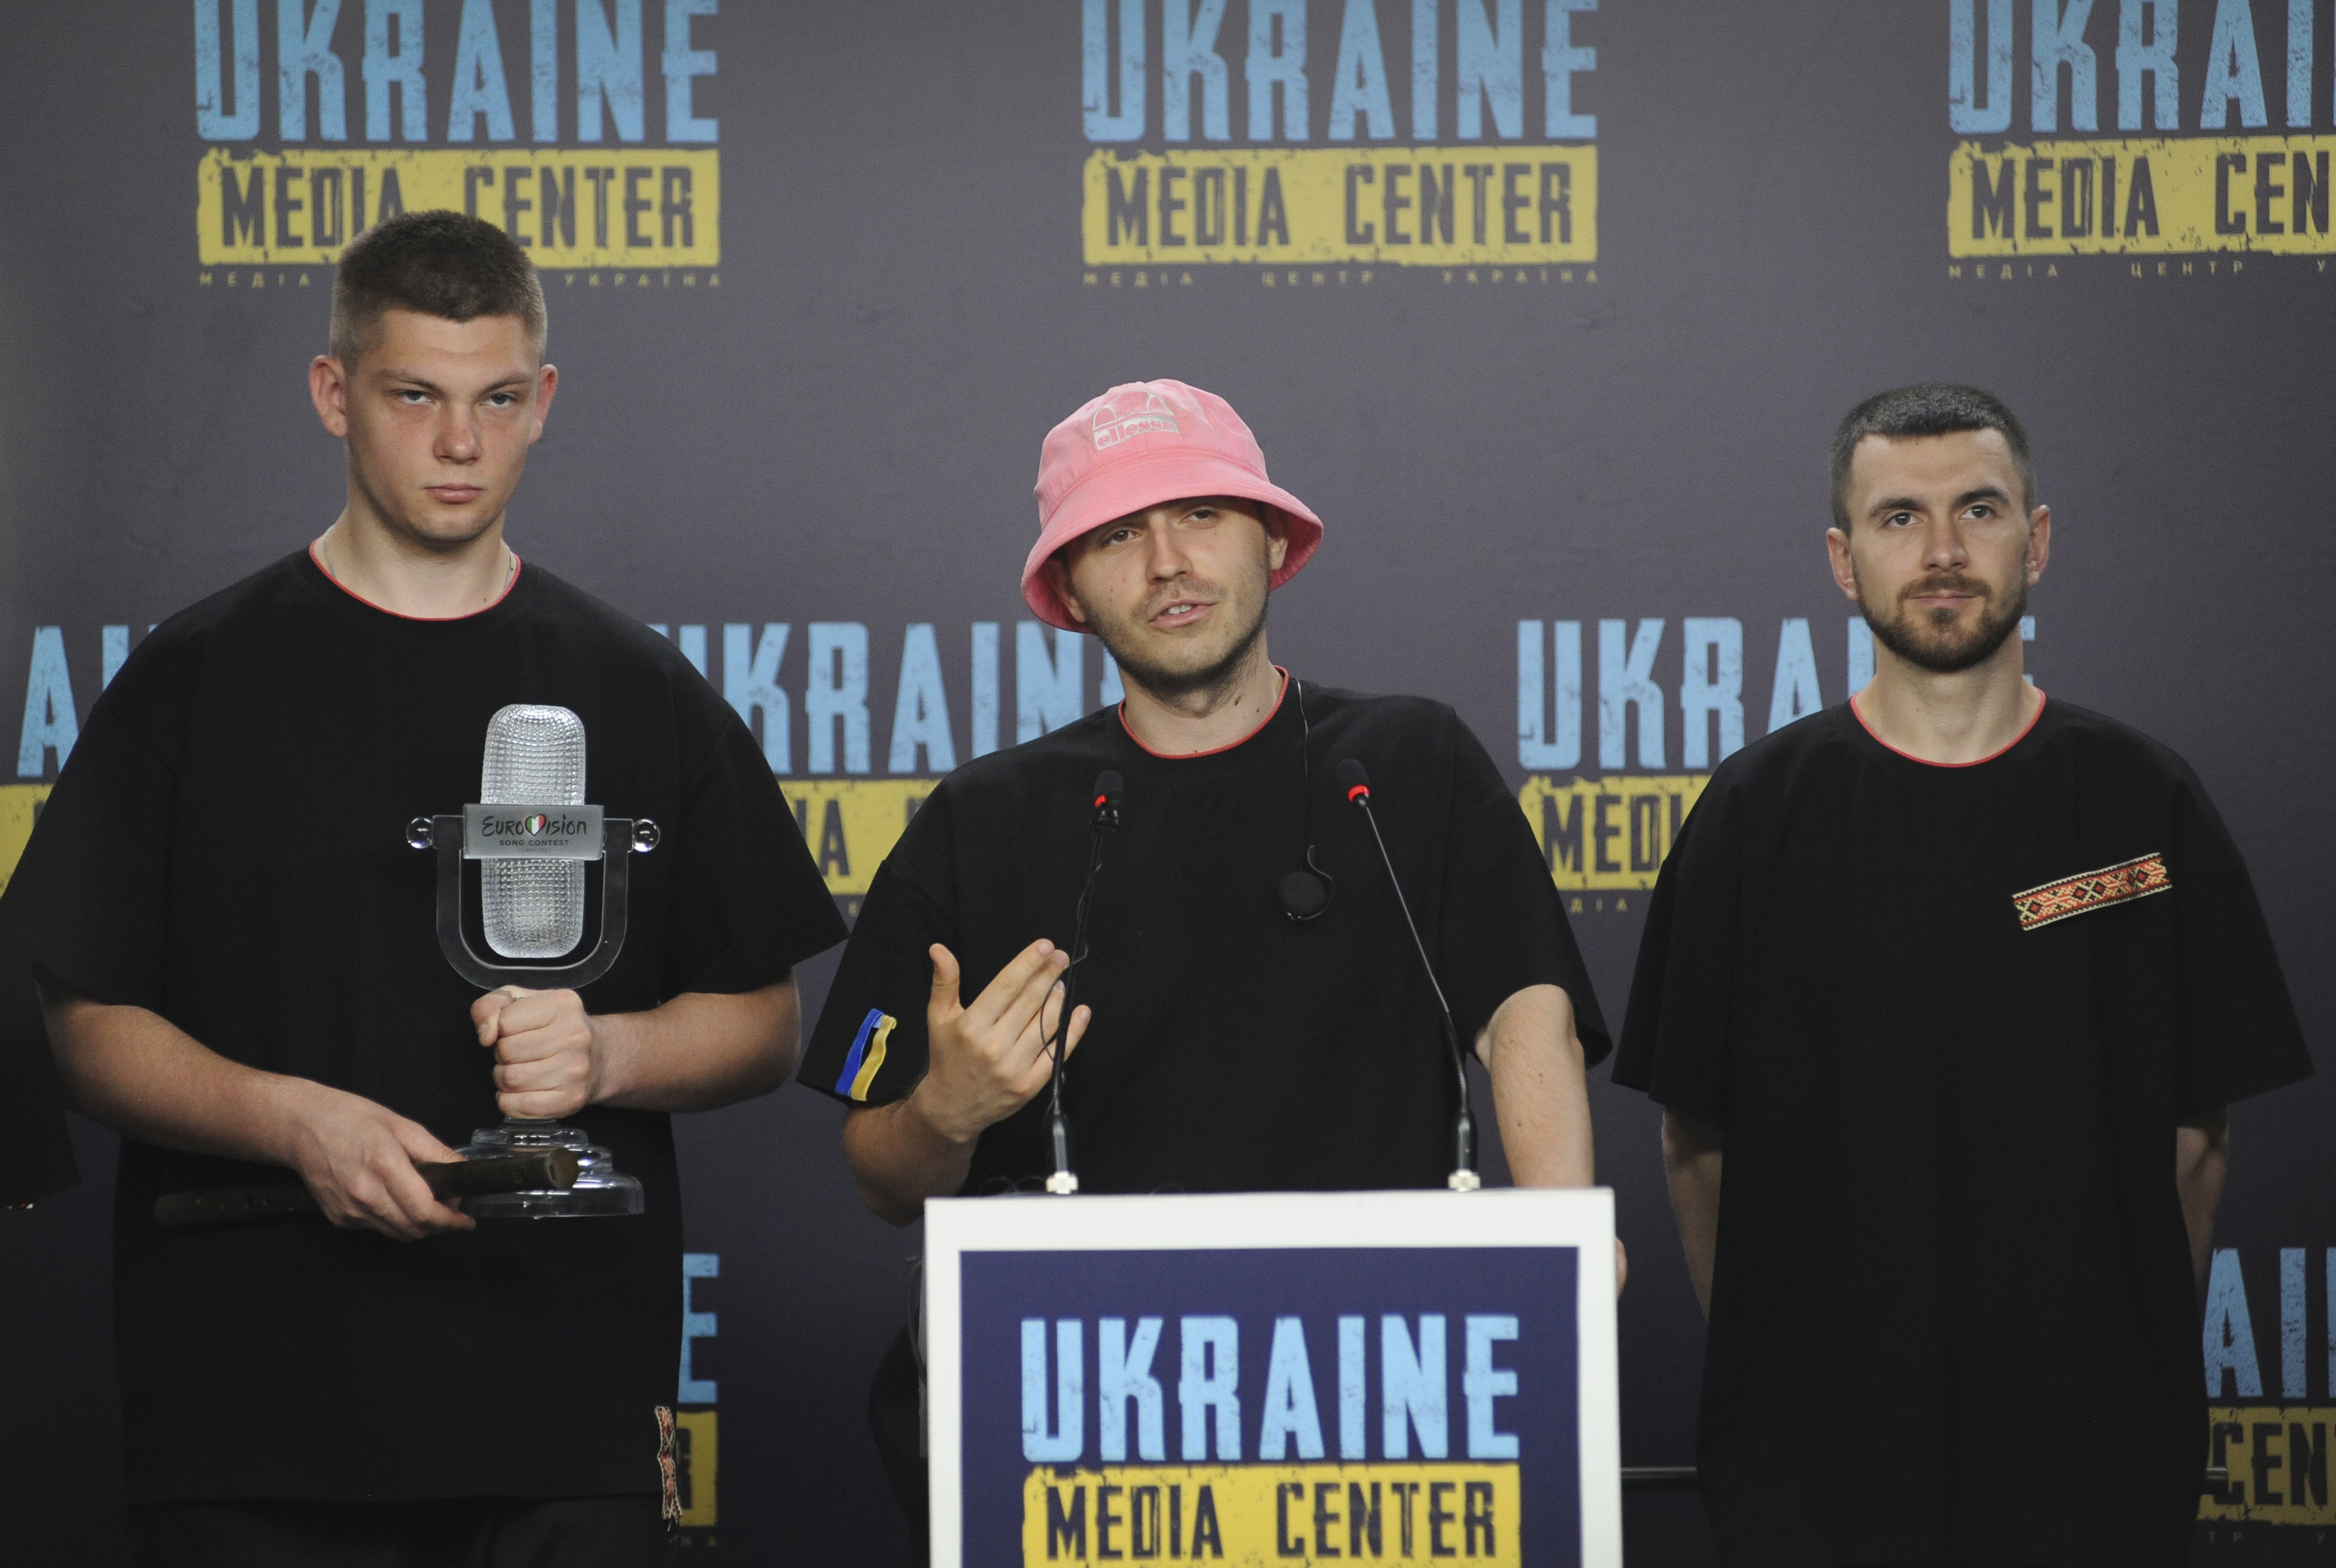 Ucrania, ganador de Eurovisión, realizará una gira por Europa para recaudar fondos para el ejército